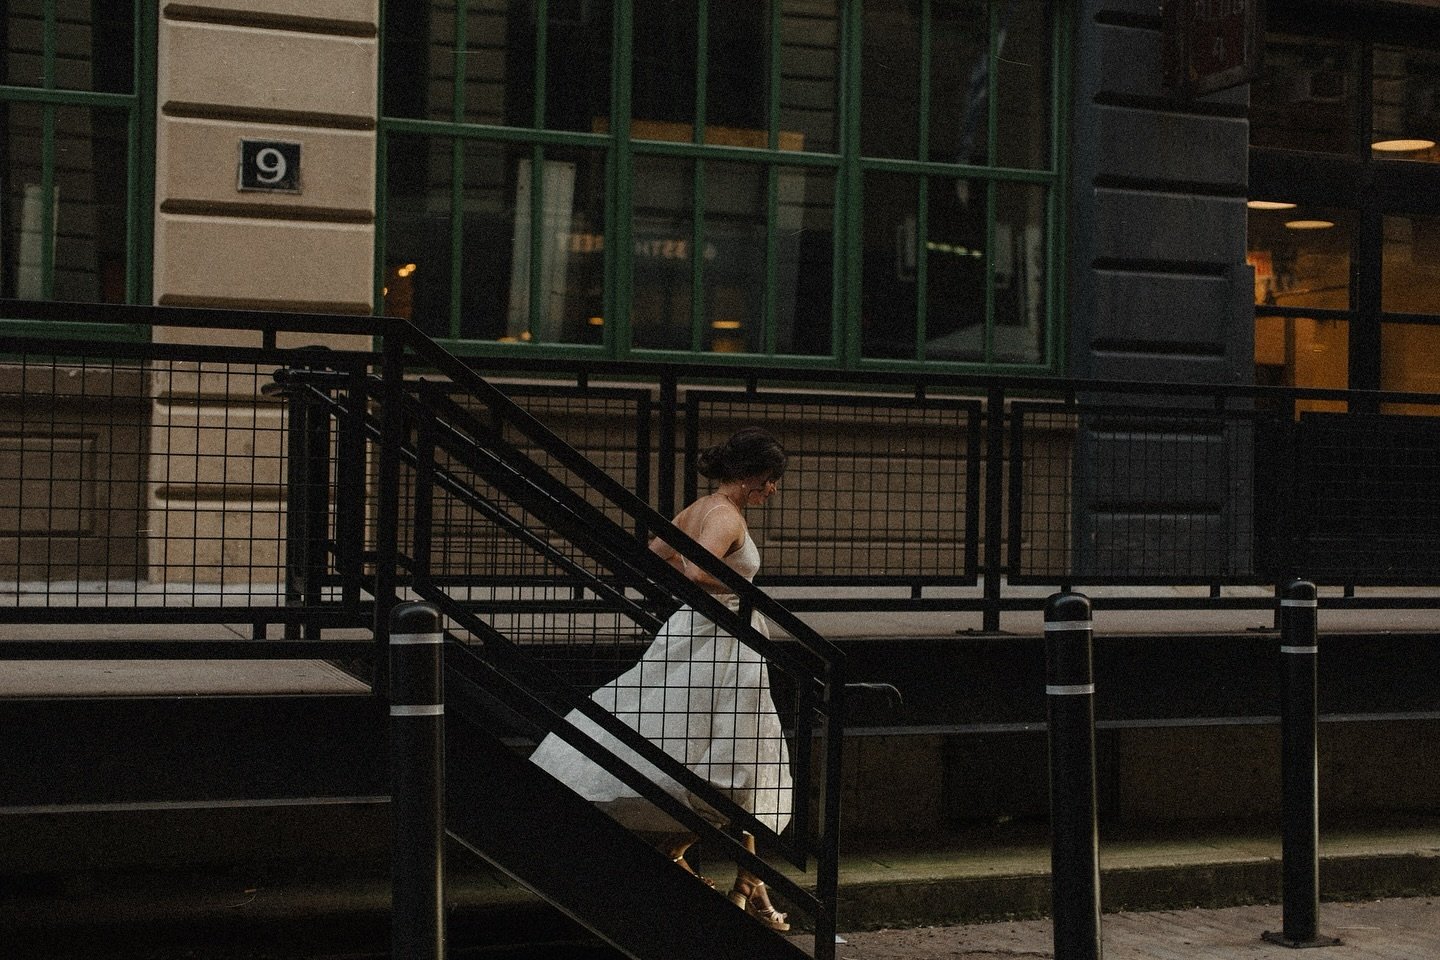 &ldquo;espresso&rdquo;
#brooklynweddingphotographer #newyorkweddingphotographer #industrialcity #filmwedding #brideportrait #documentaryweddingphotography